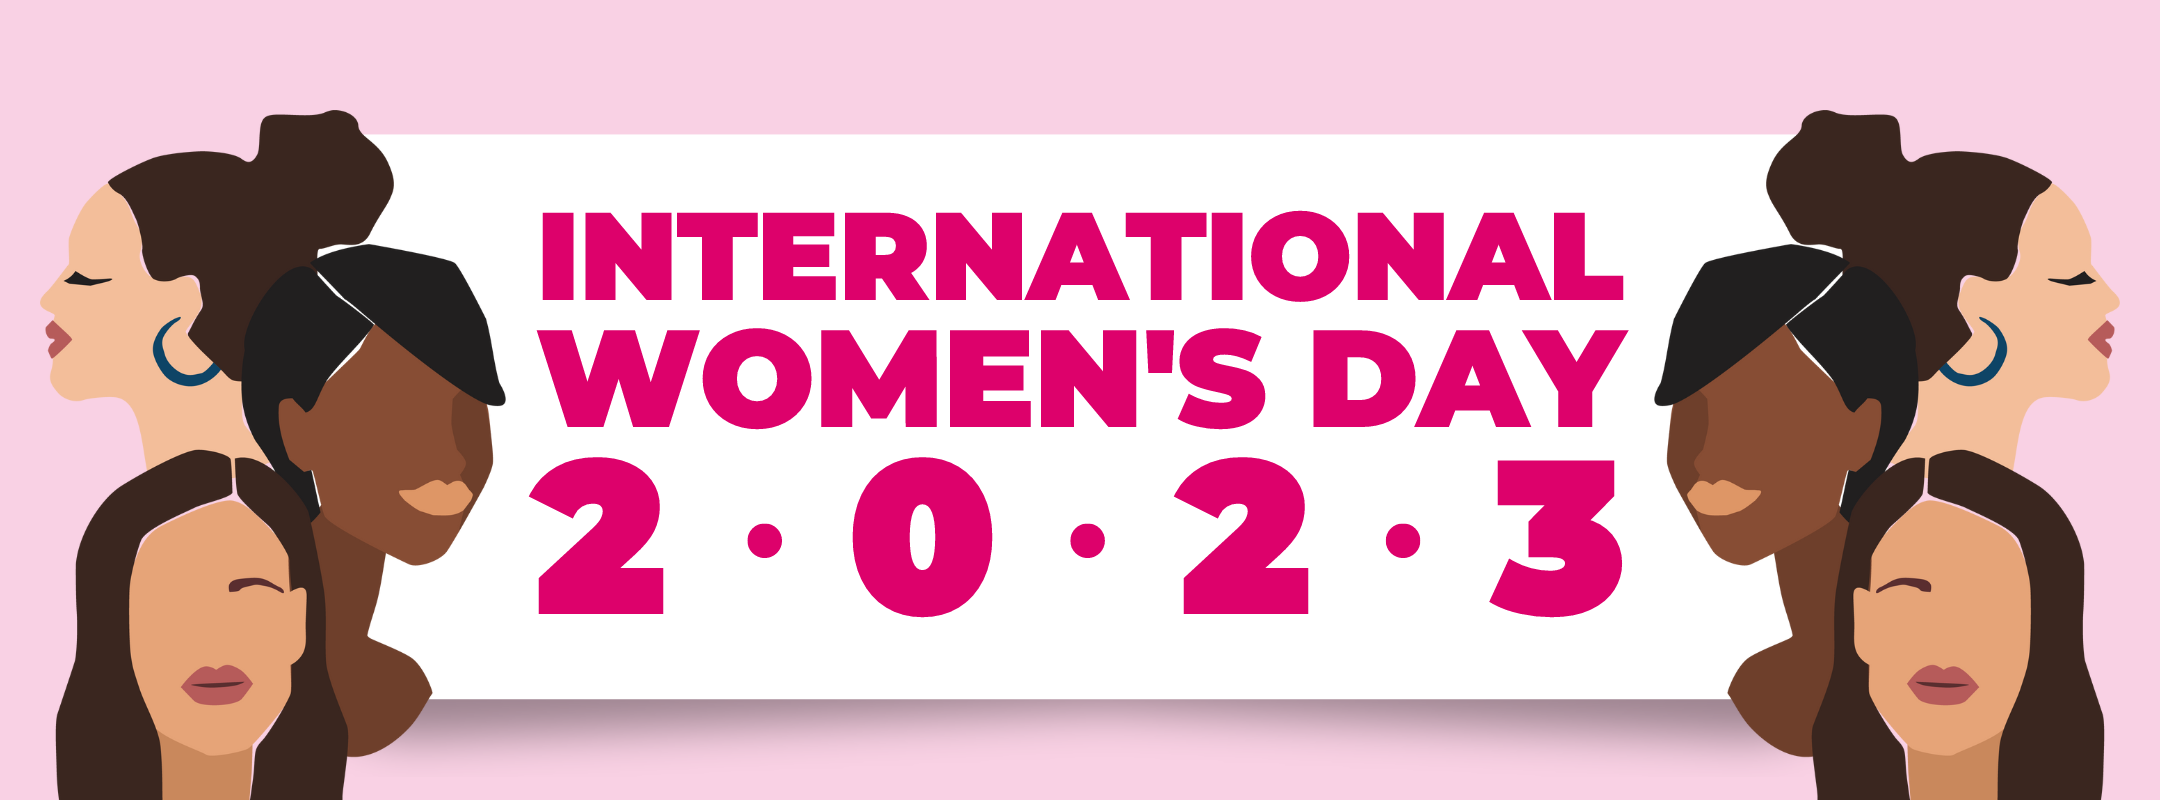 International Women’s Day 2023: #EmbraceEquity